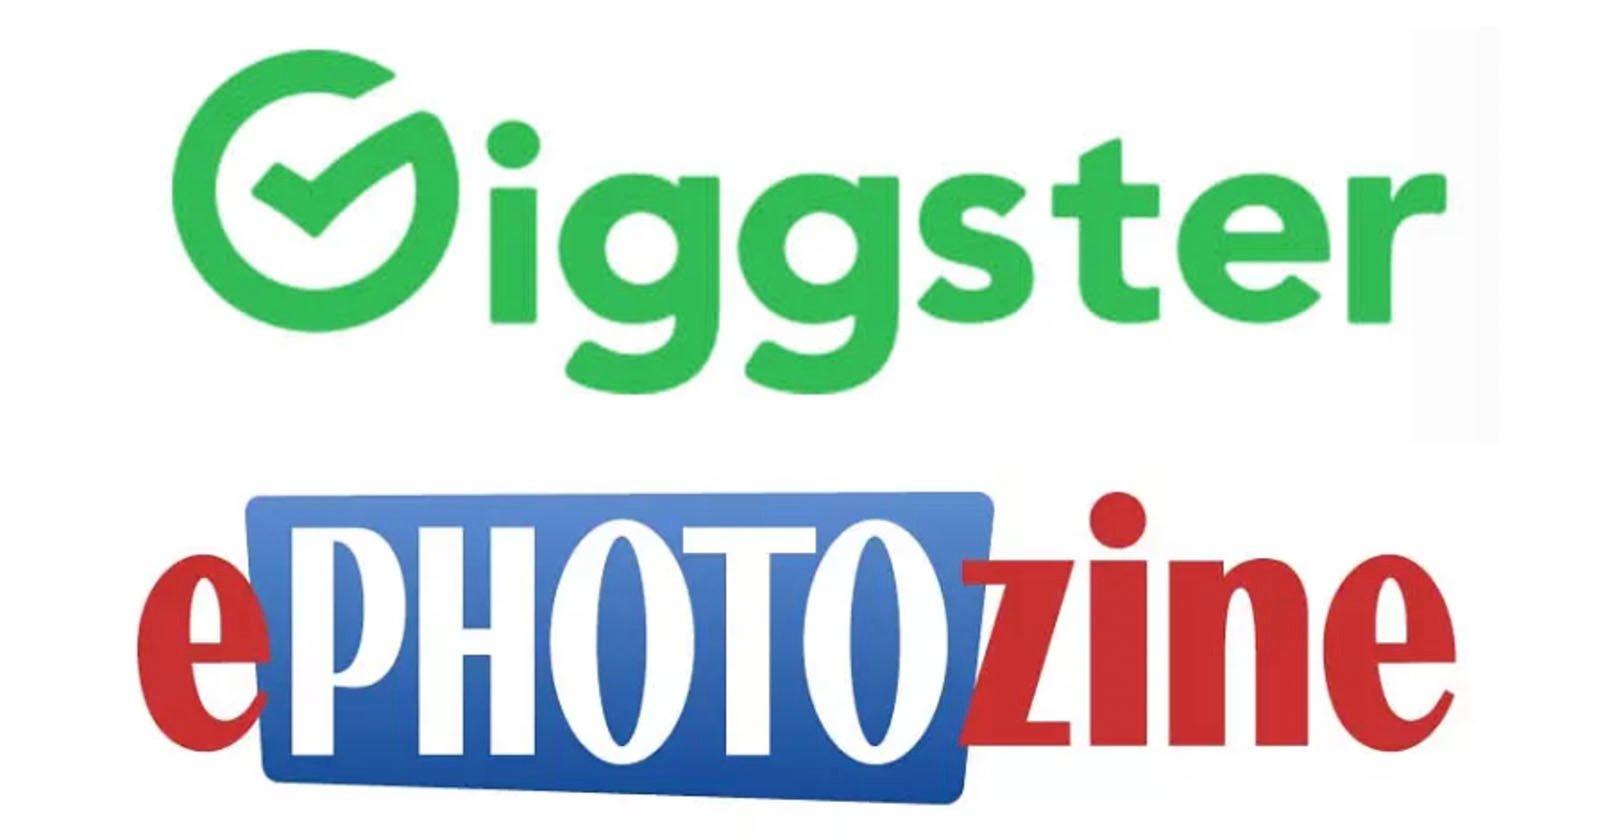  giggster has acquired photo website ephotozine 